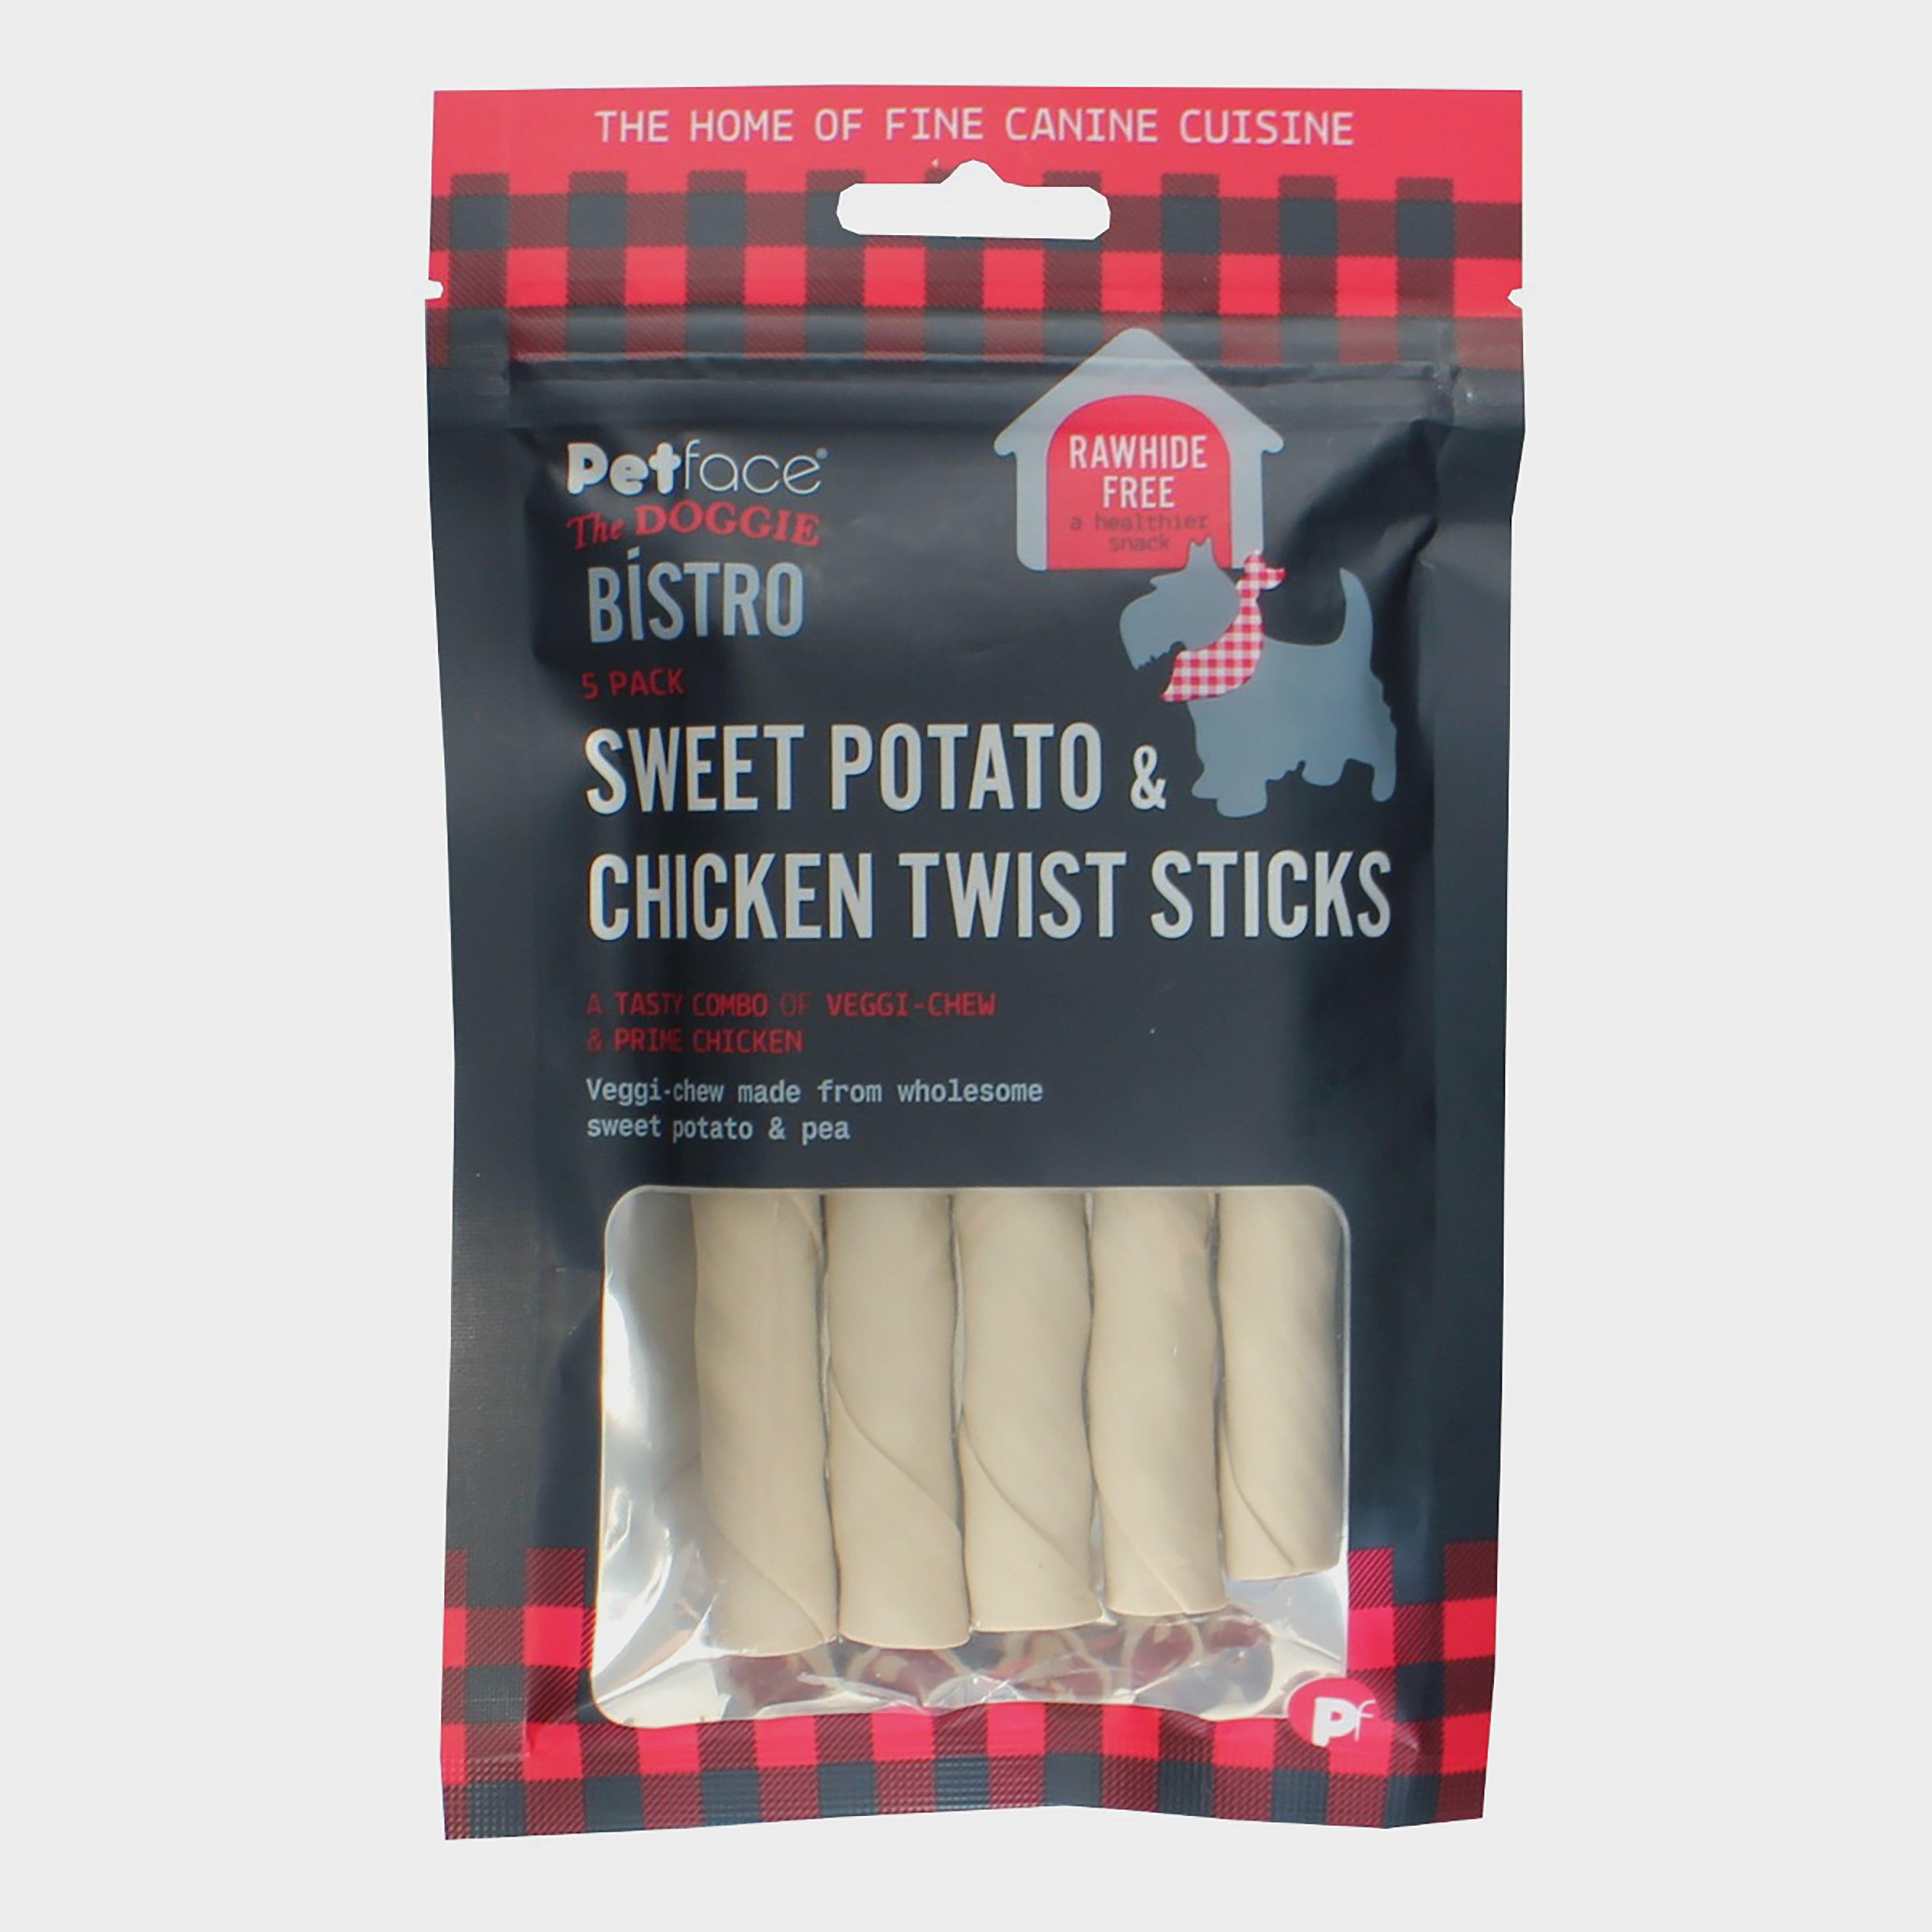 Image of Petface Doggie Bistro Sweet Potato Chicken Twist Sticks 5 Pack - Twst/Twst, TWST/TWST